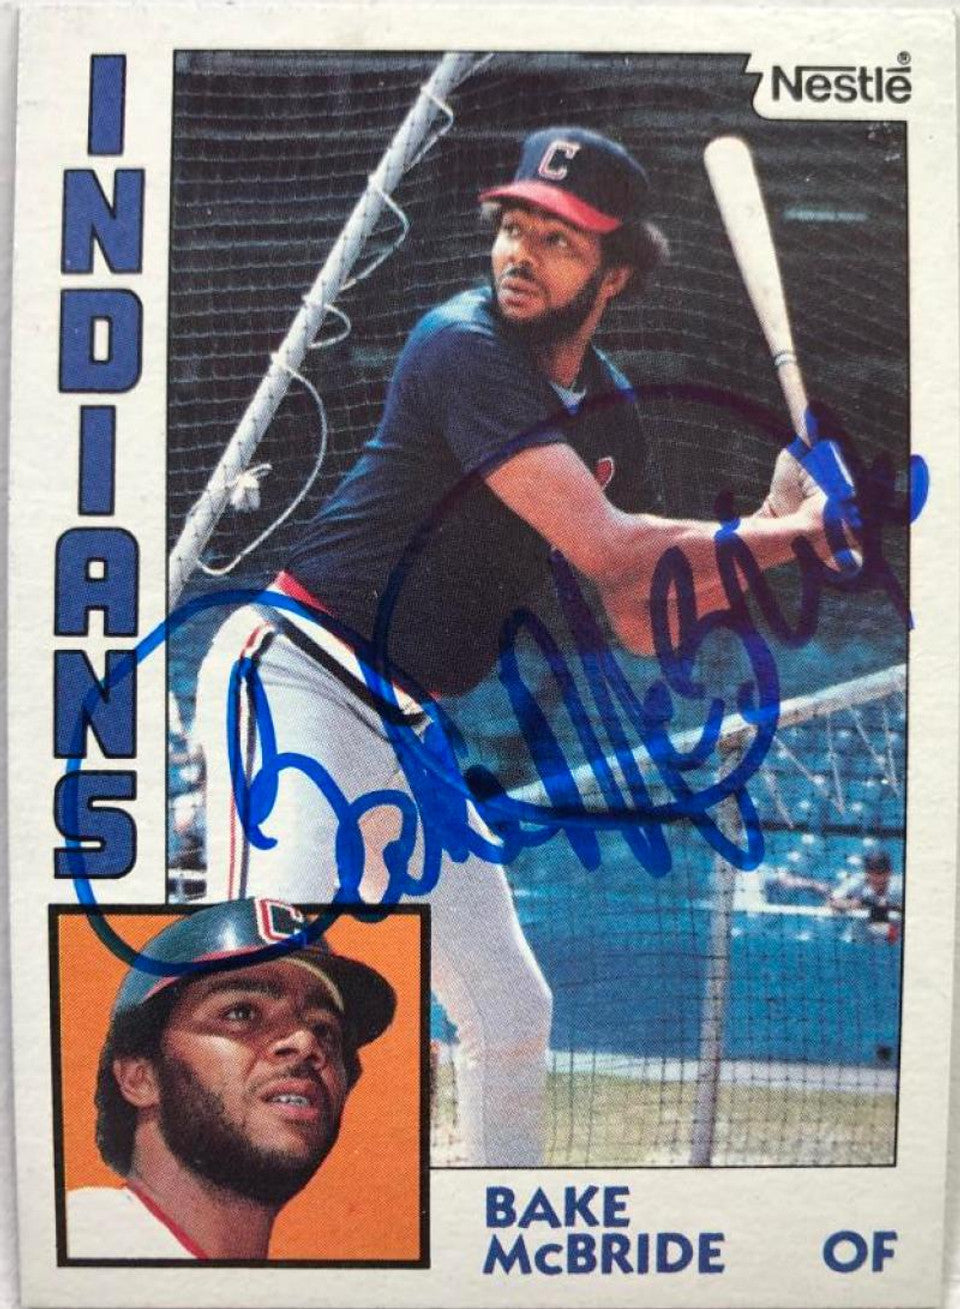 Bake McBride Signed 1984 Nestle Baseball Card - Cleveland Indians